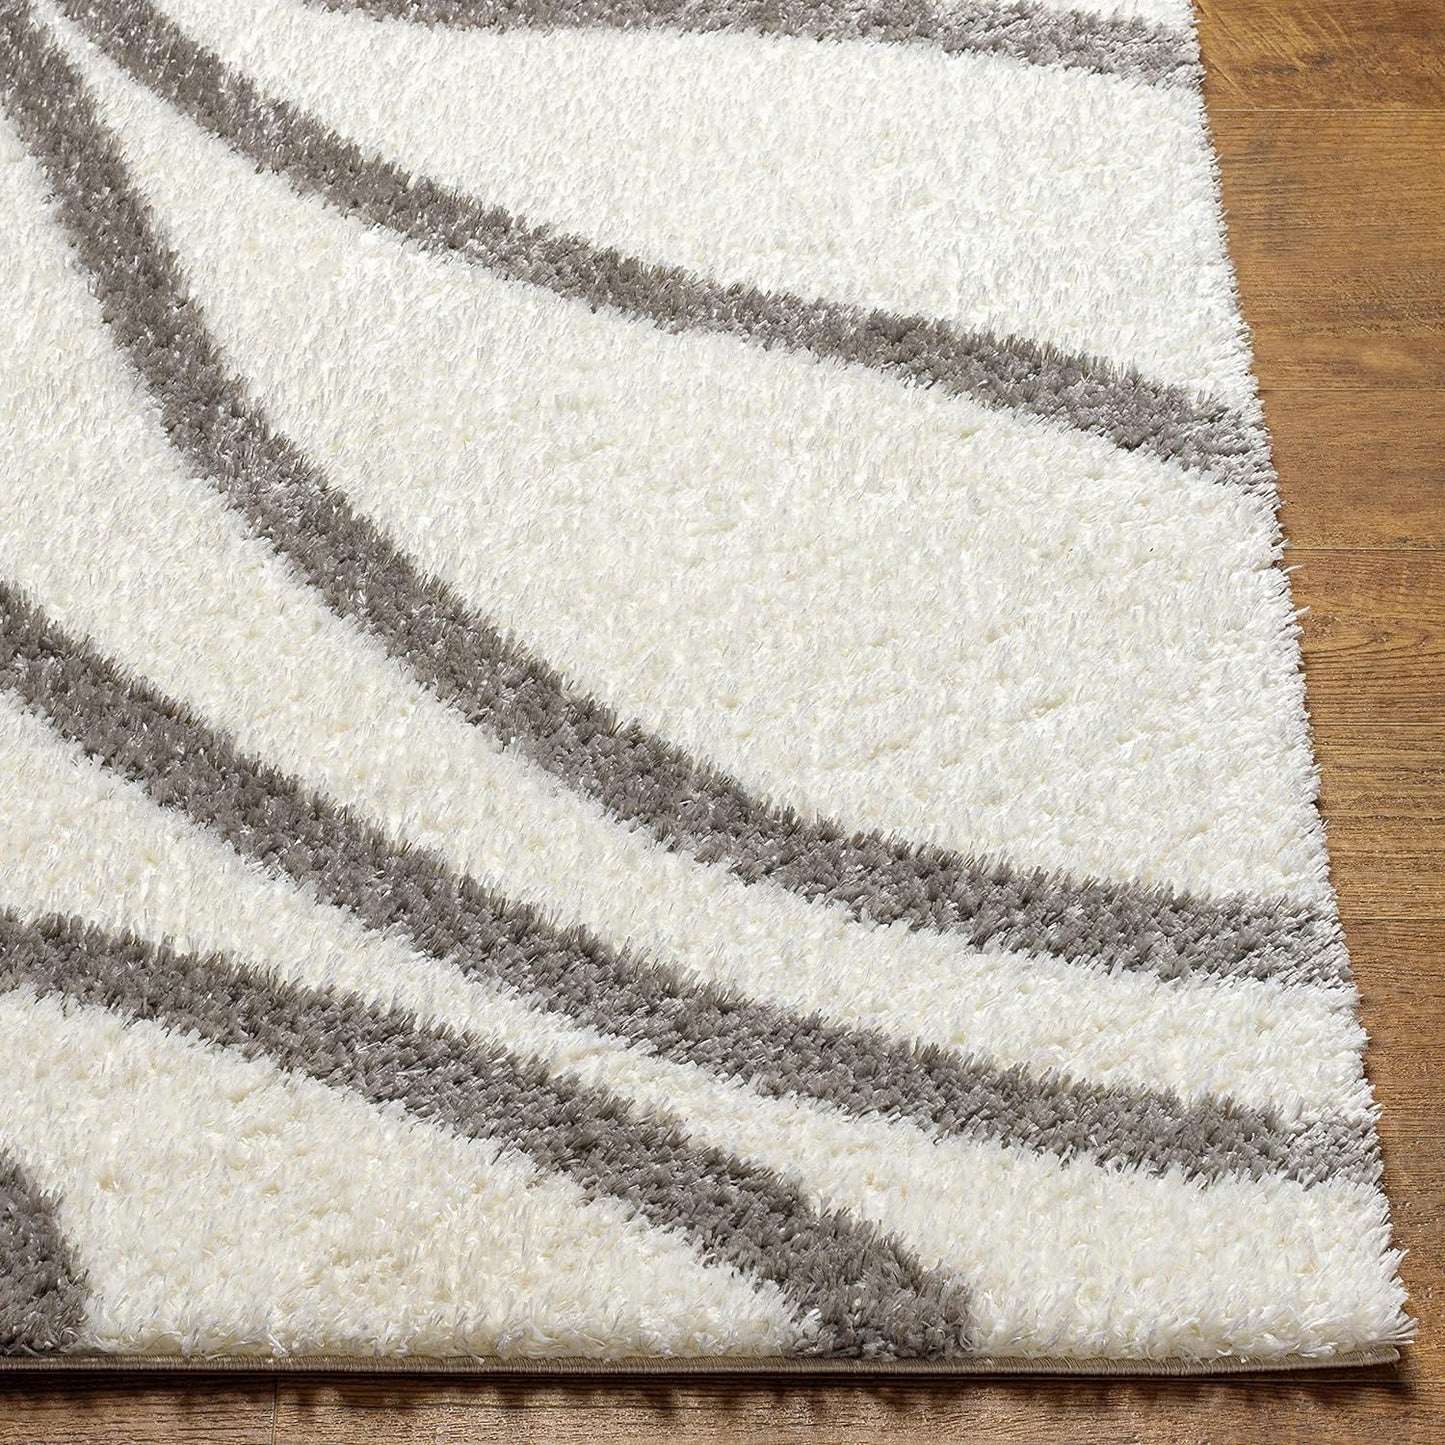 Kashyapa Rugs Collection - Handmade Polyester Microfiber Cozy Soft & Plush Shaggy Carpet for Living Room